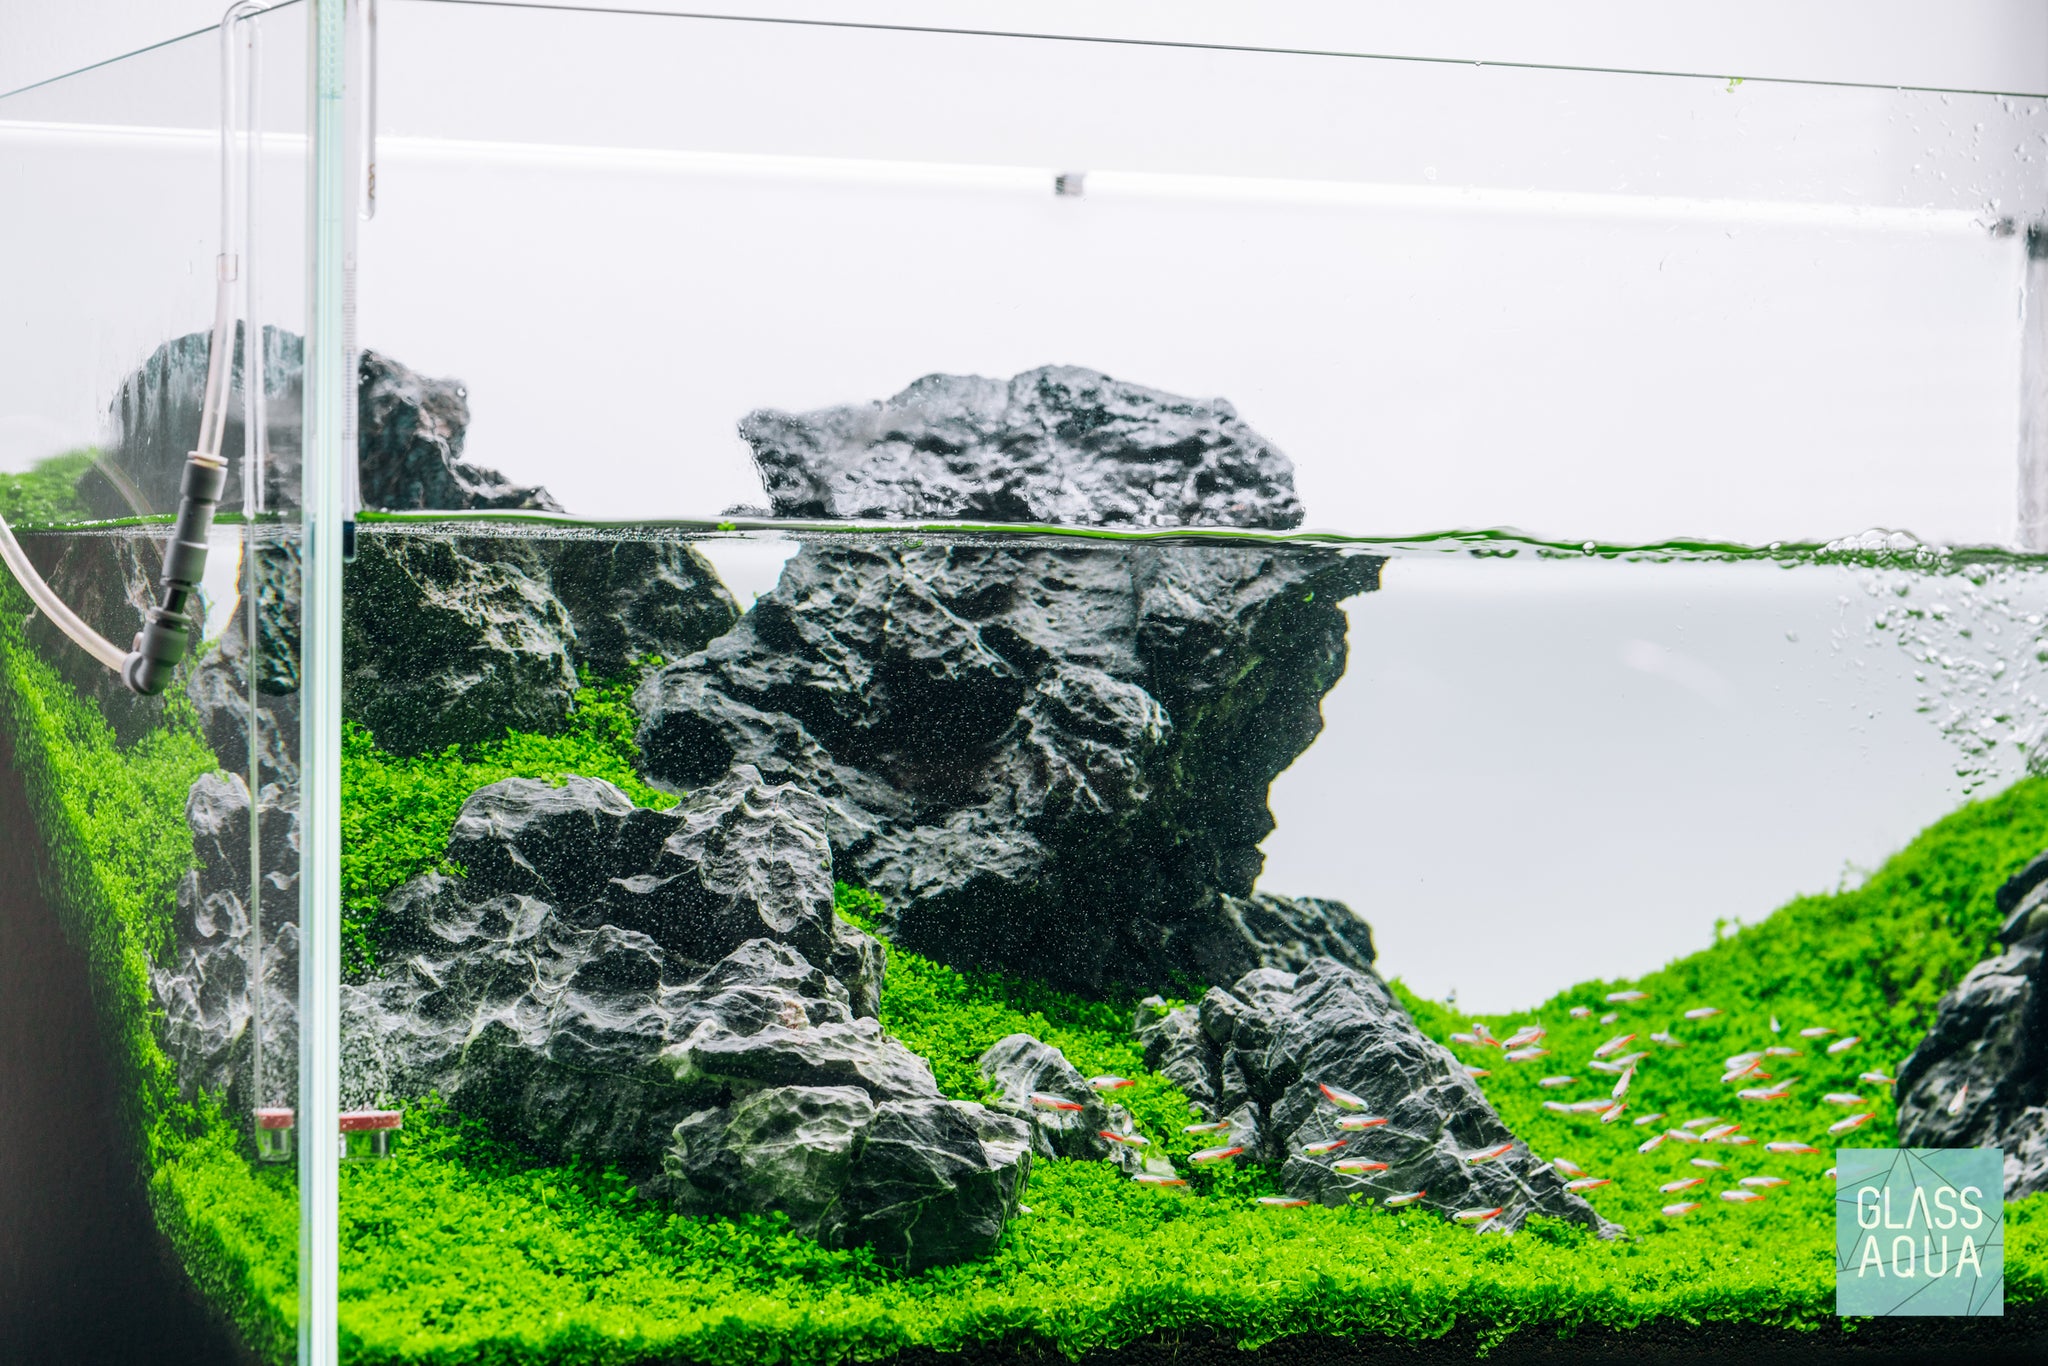 Glass Aqua Planted Aquarium Tank